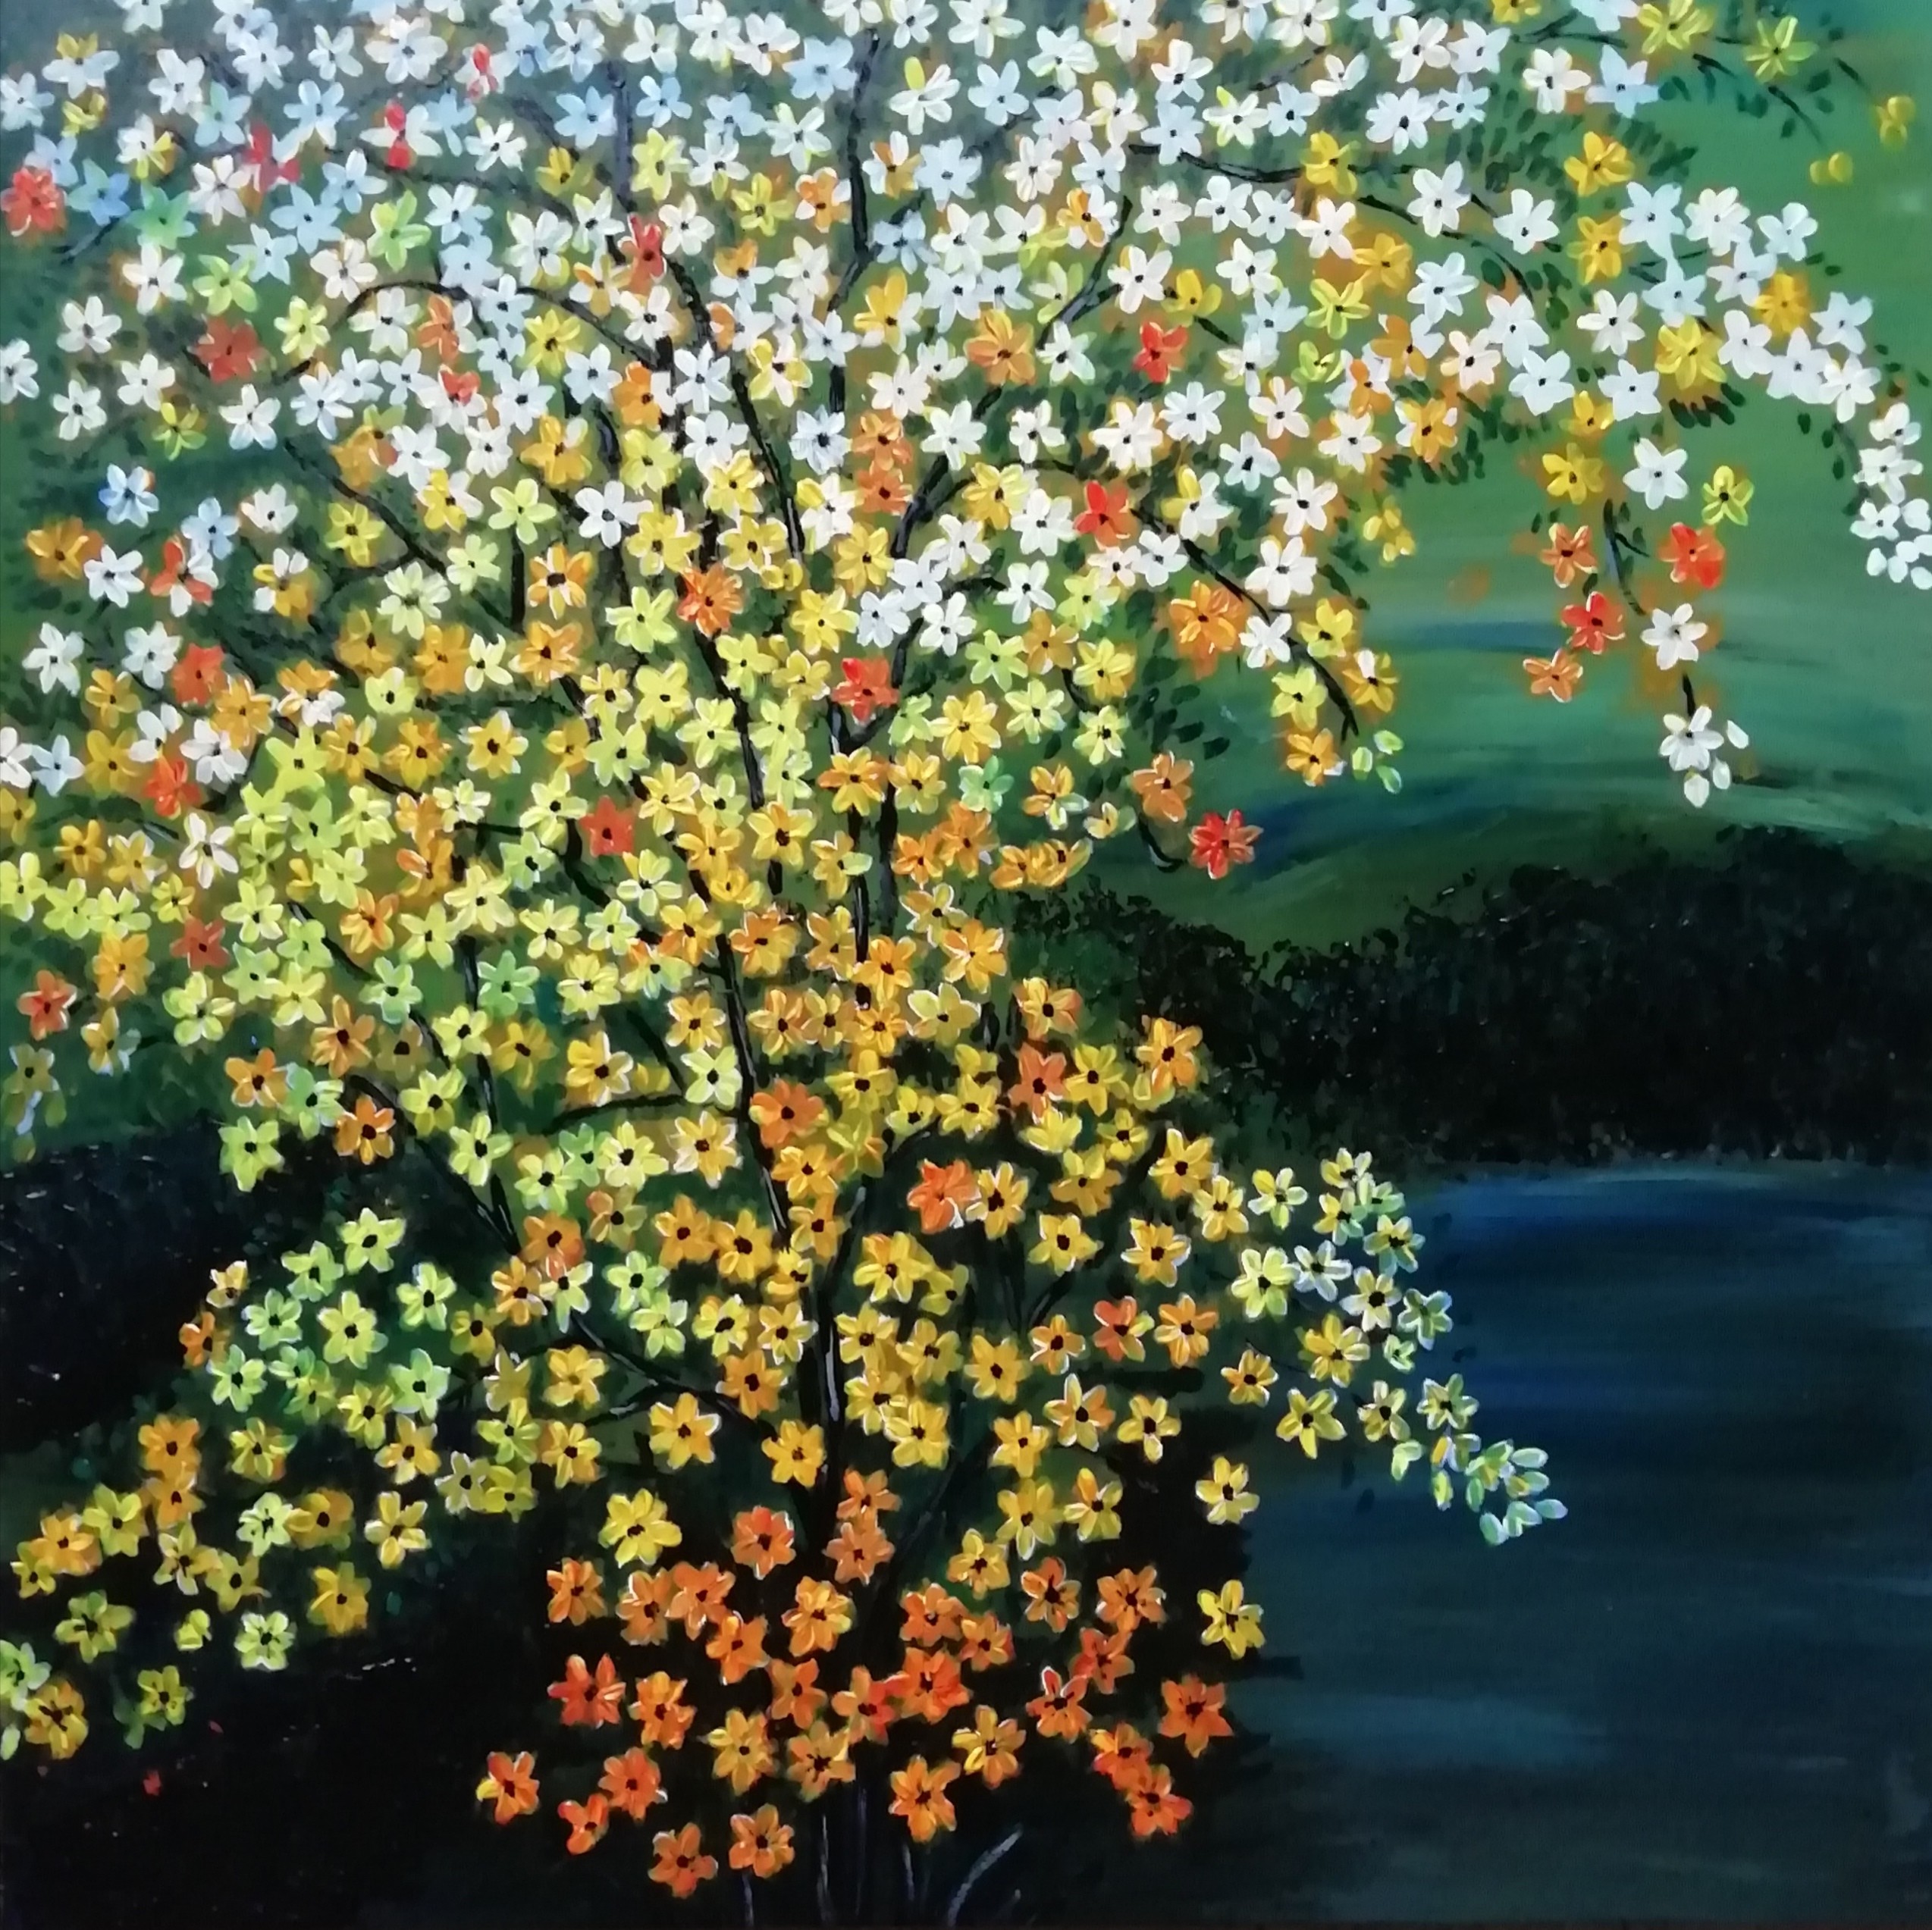 The Flourishing Tree by DINUSHA Weerakoon